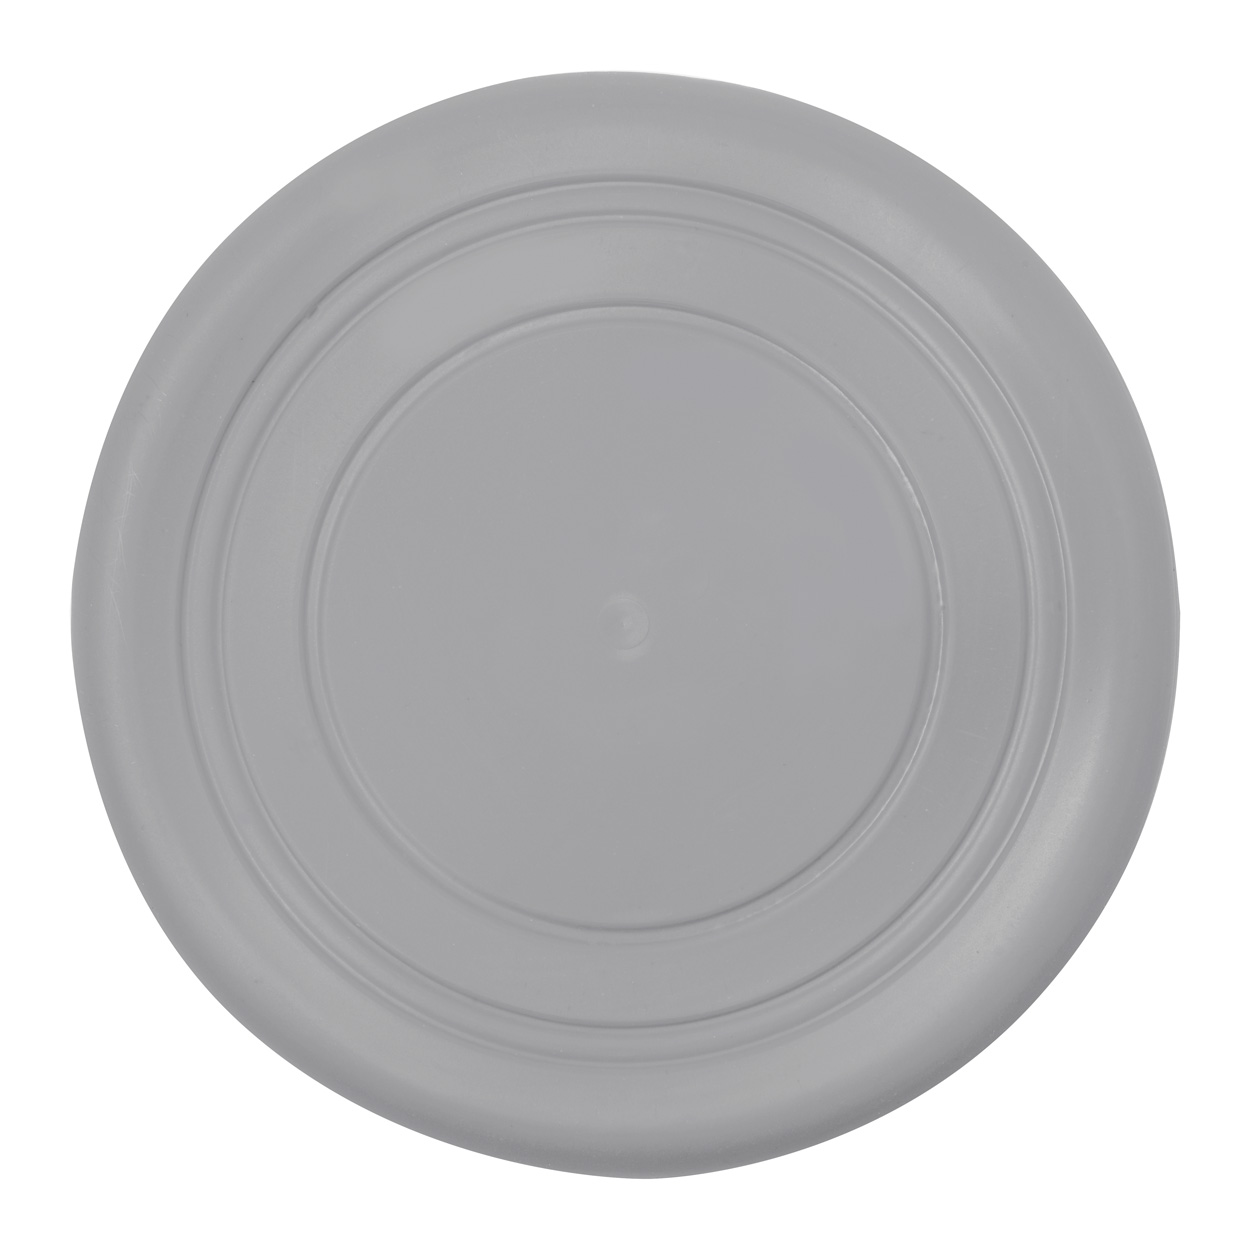 Giraud frisbee - grey